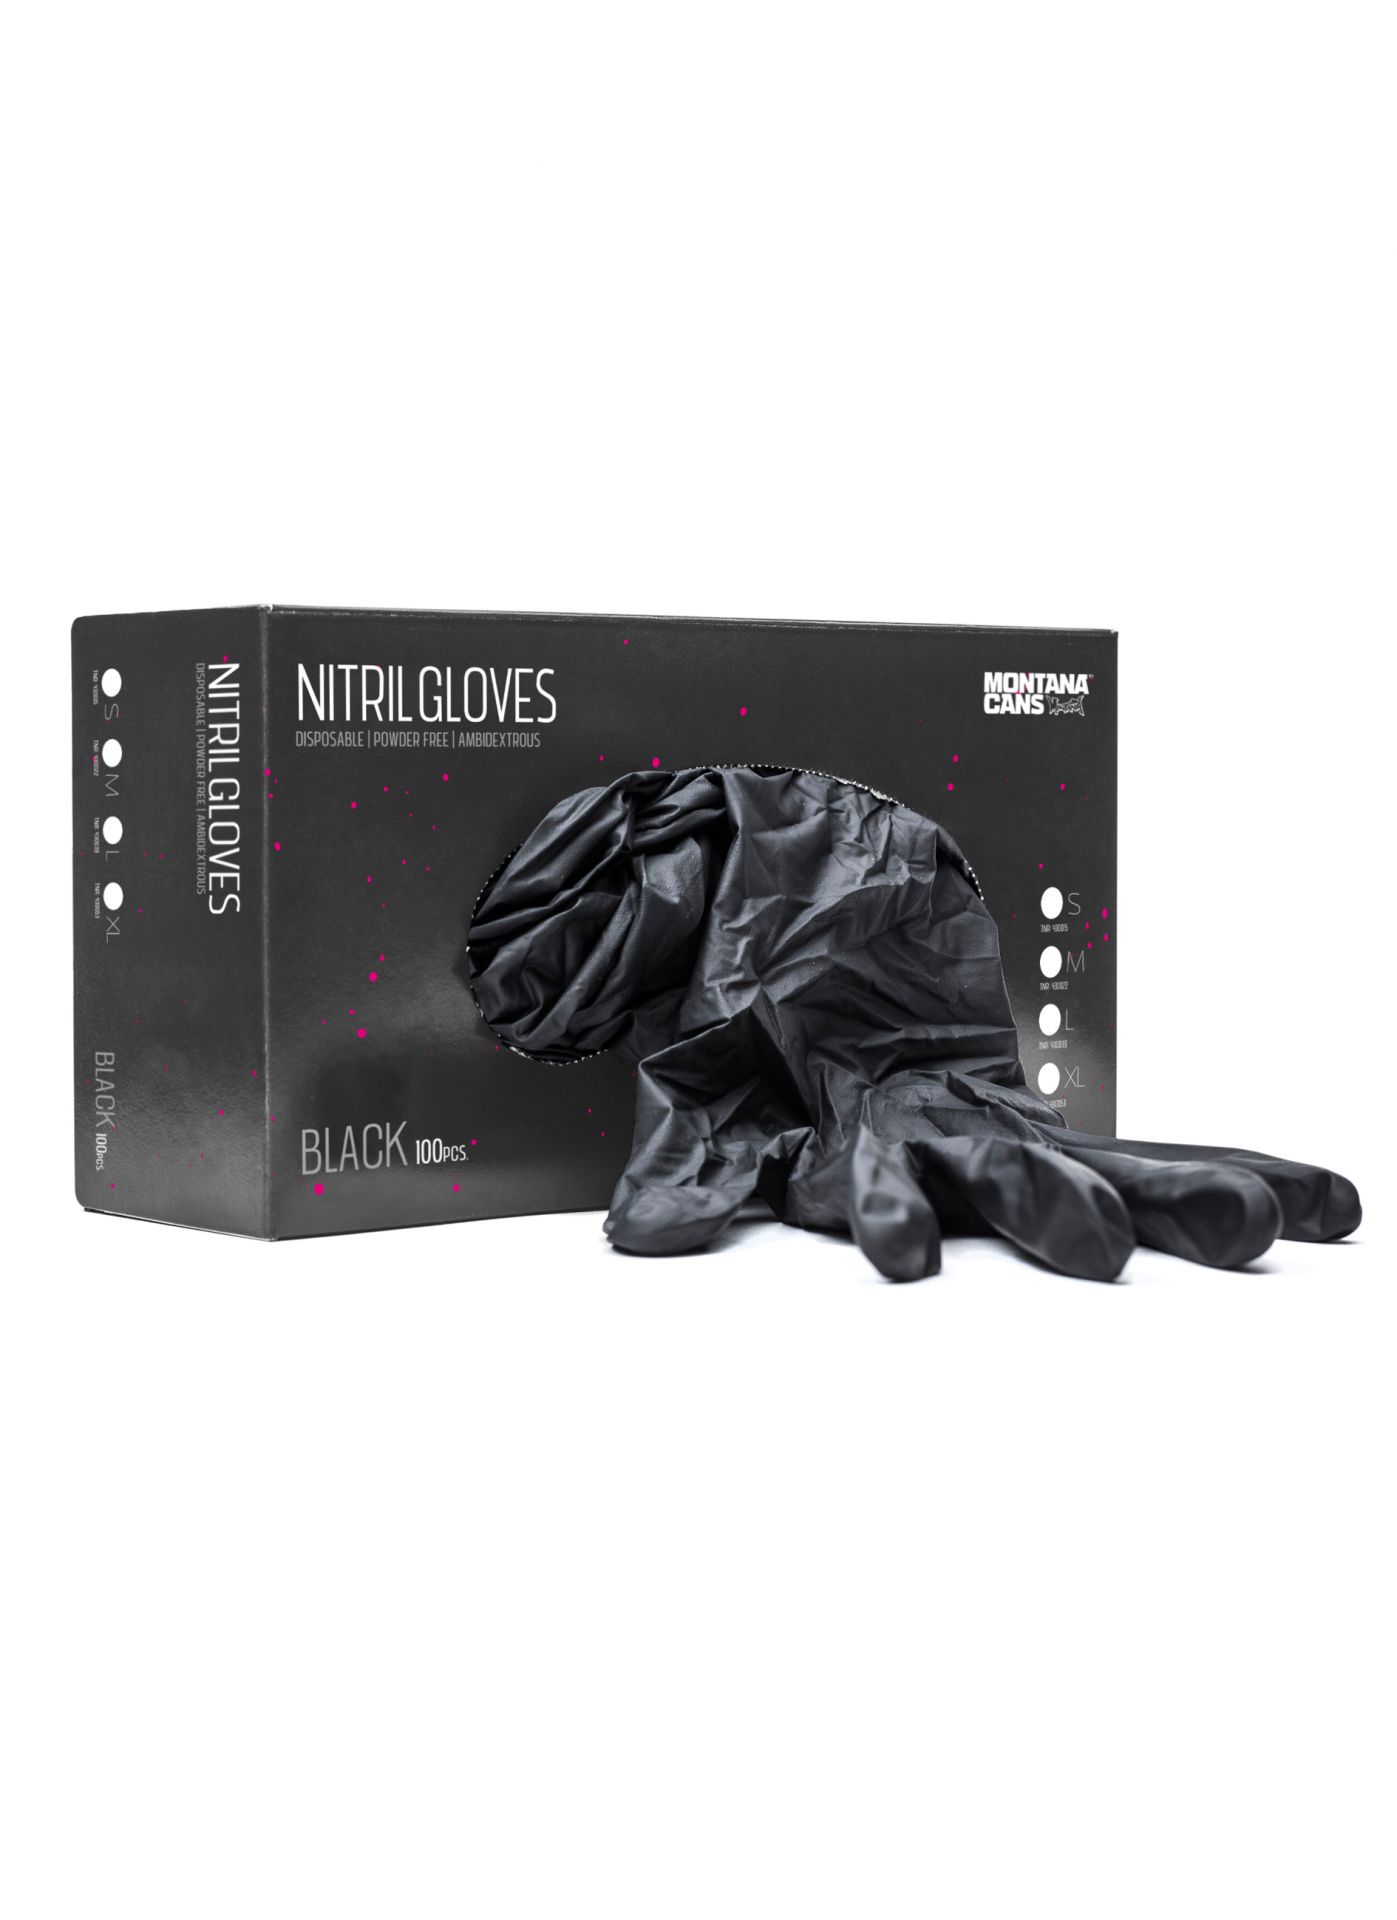 Montana Nitrile Gloves - Box of 100